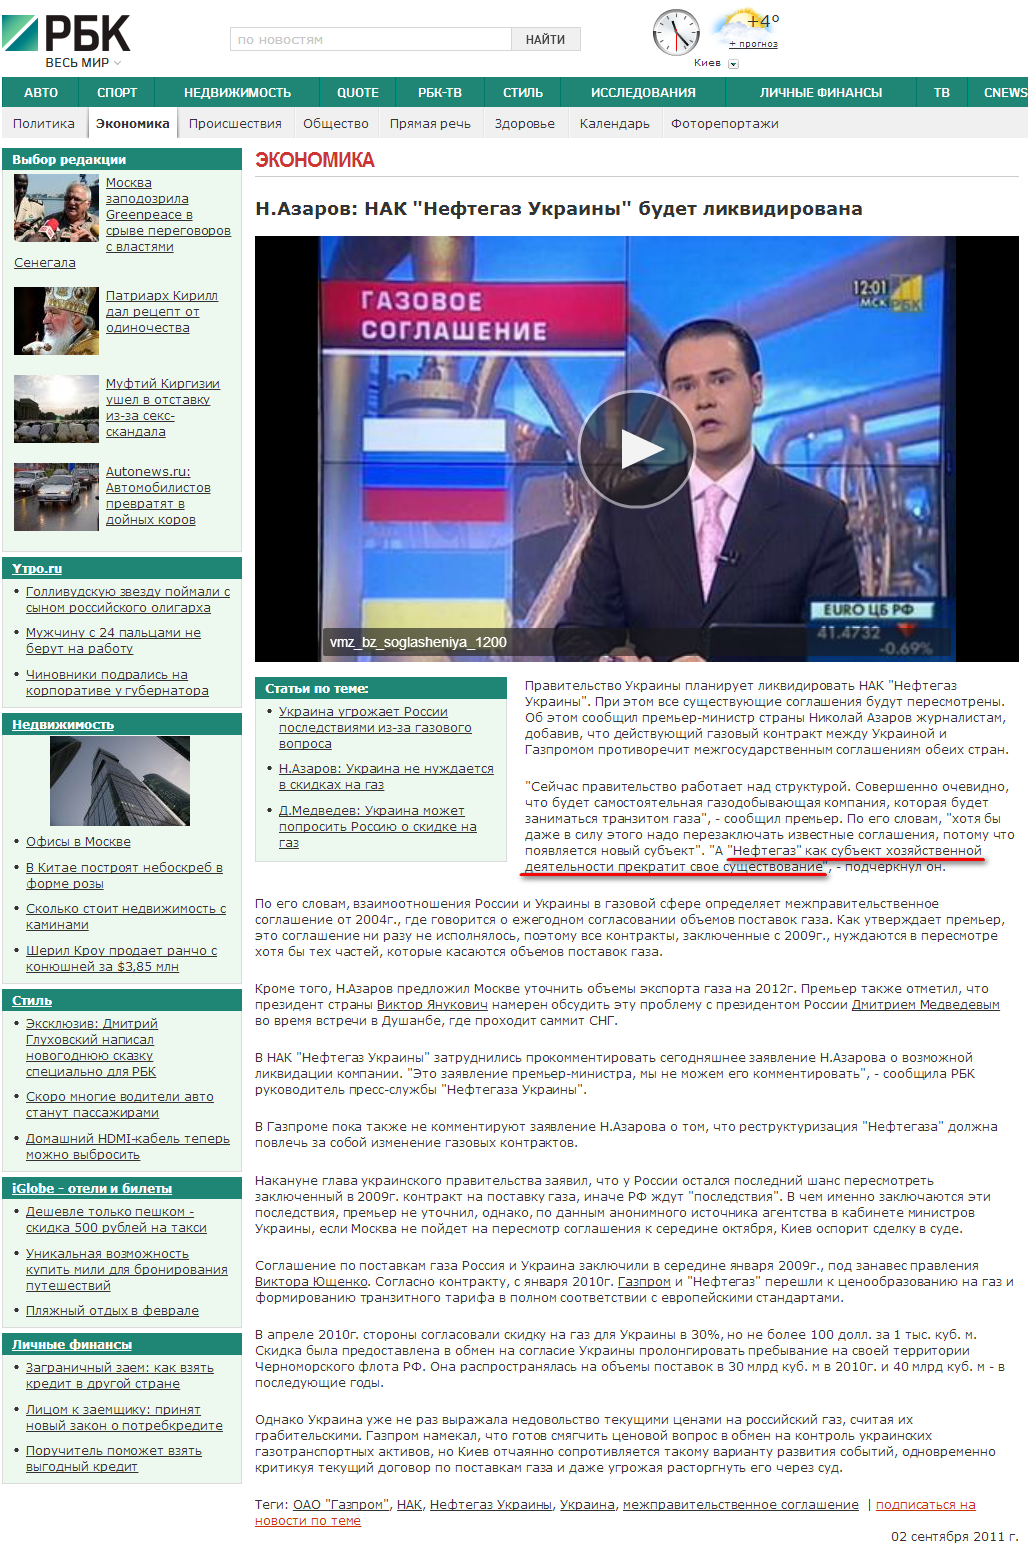 http://top.rbc.ru/economics/02/09/2011/613587.shtml